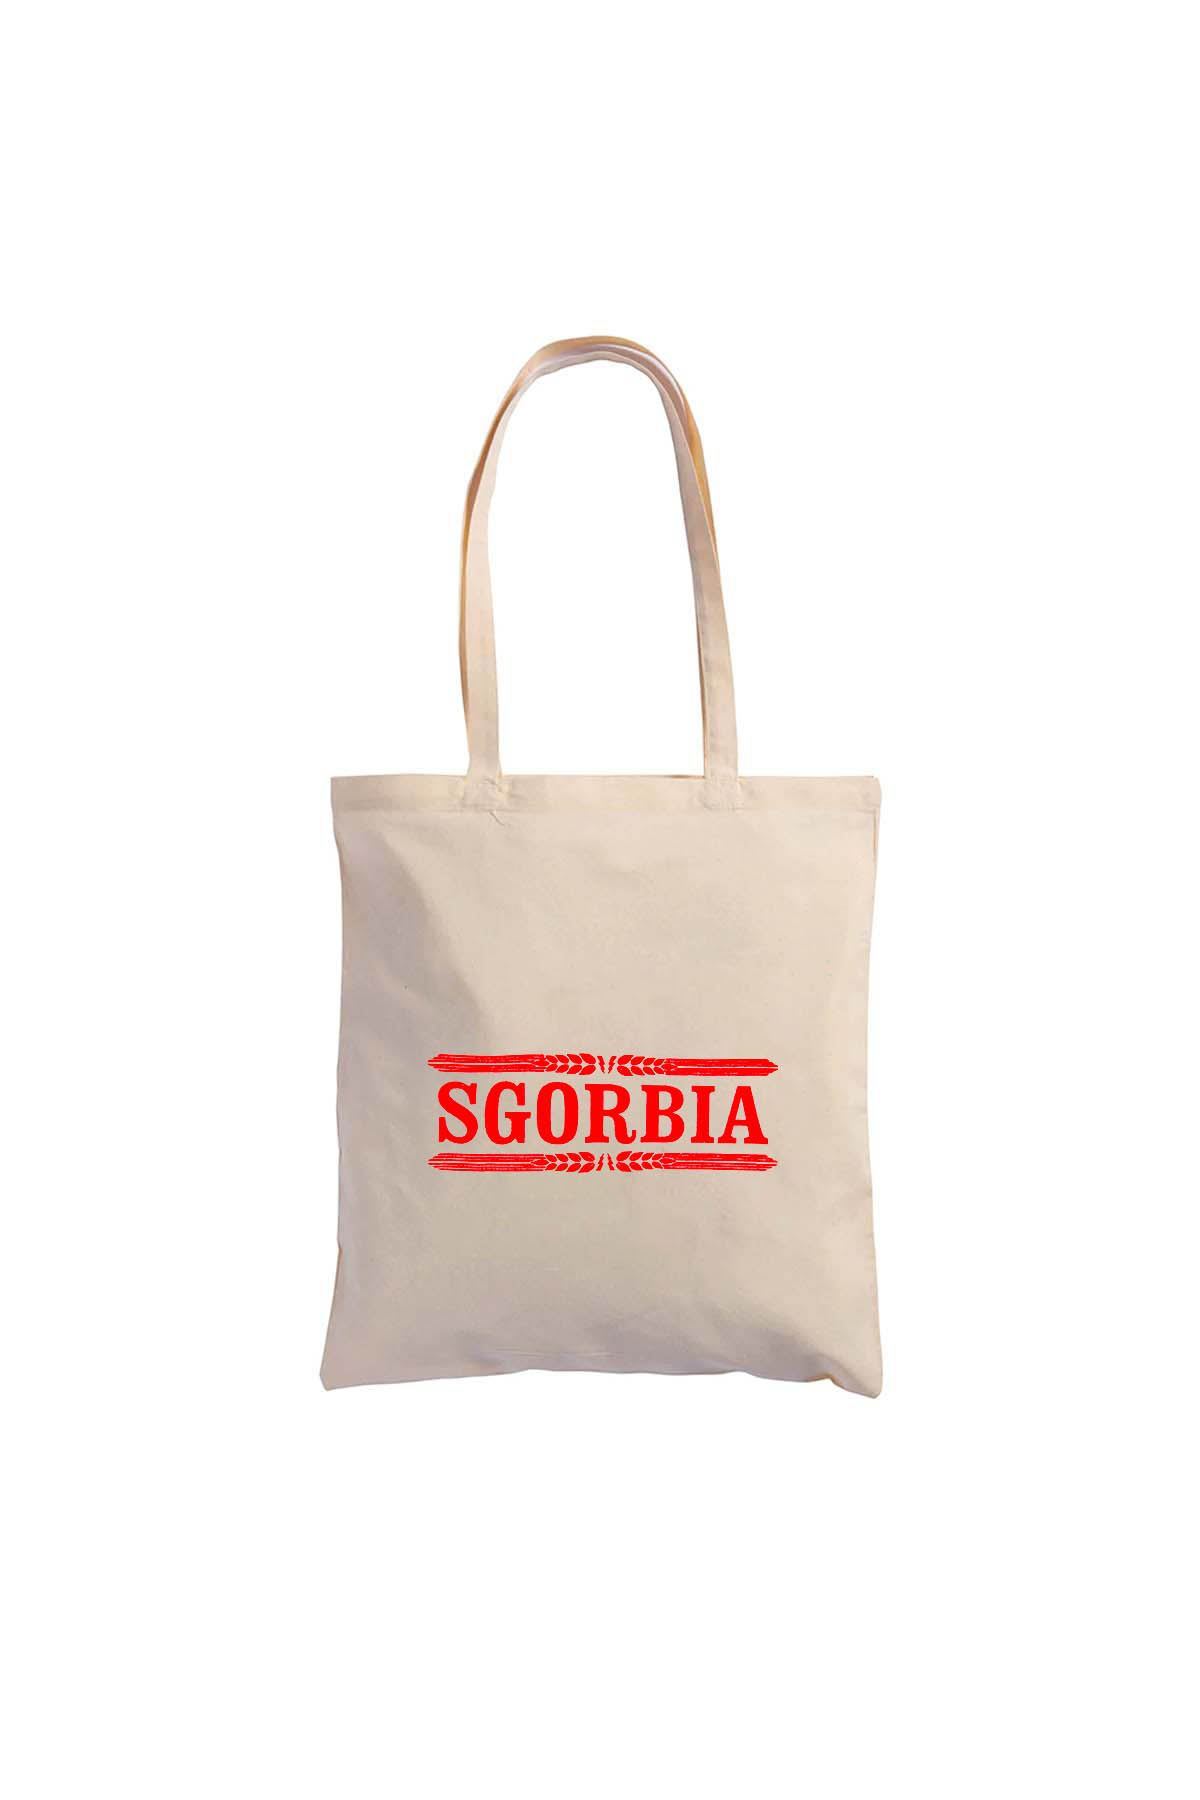 SGORBIA Cotton Bag